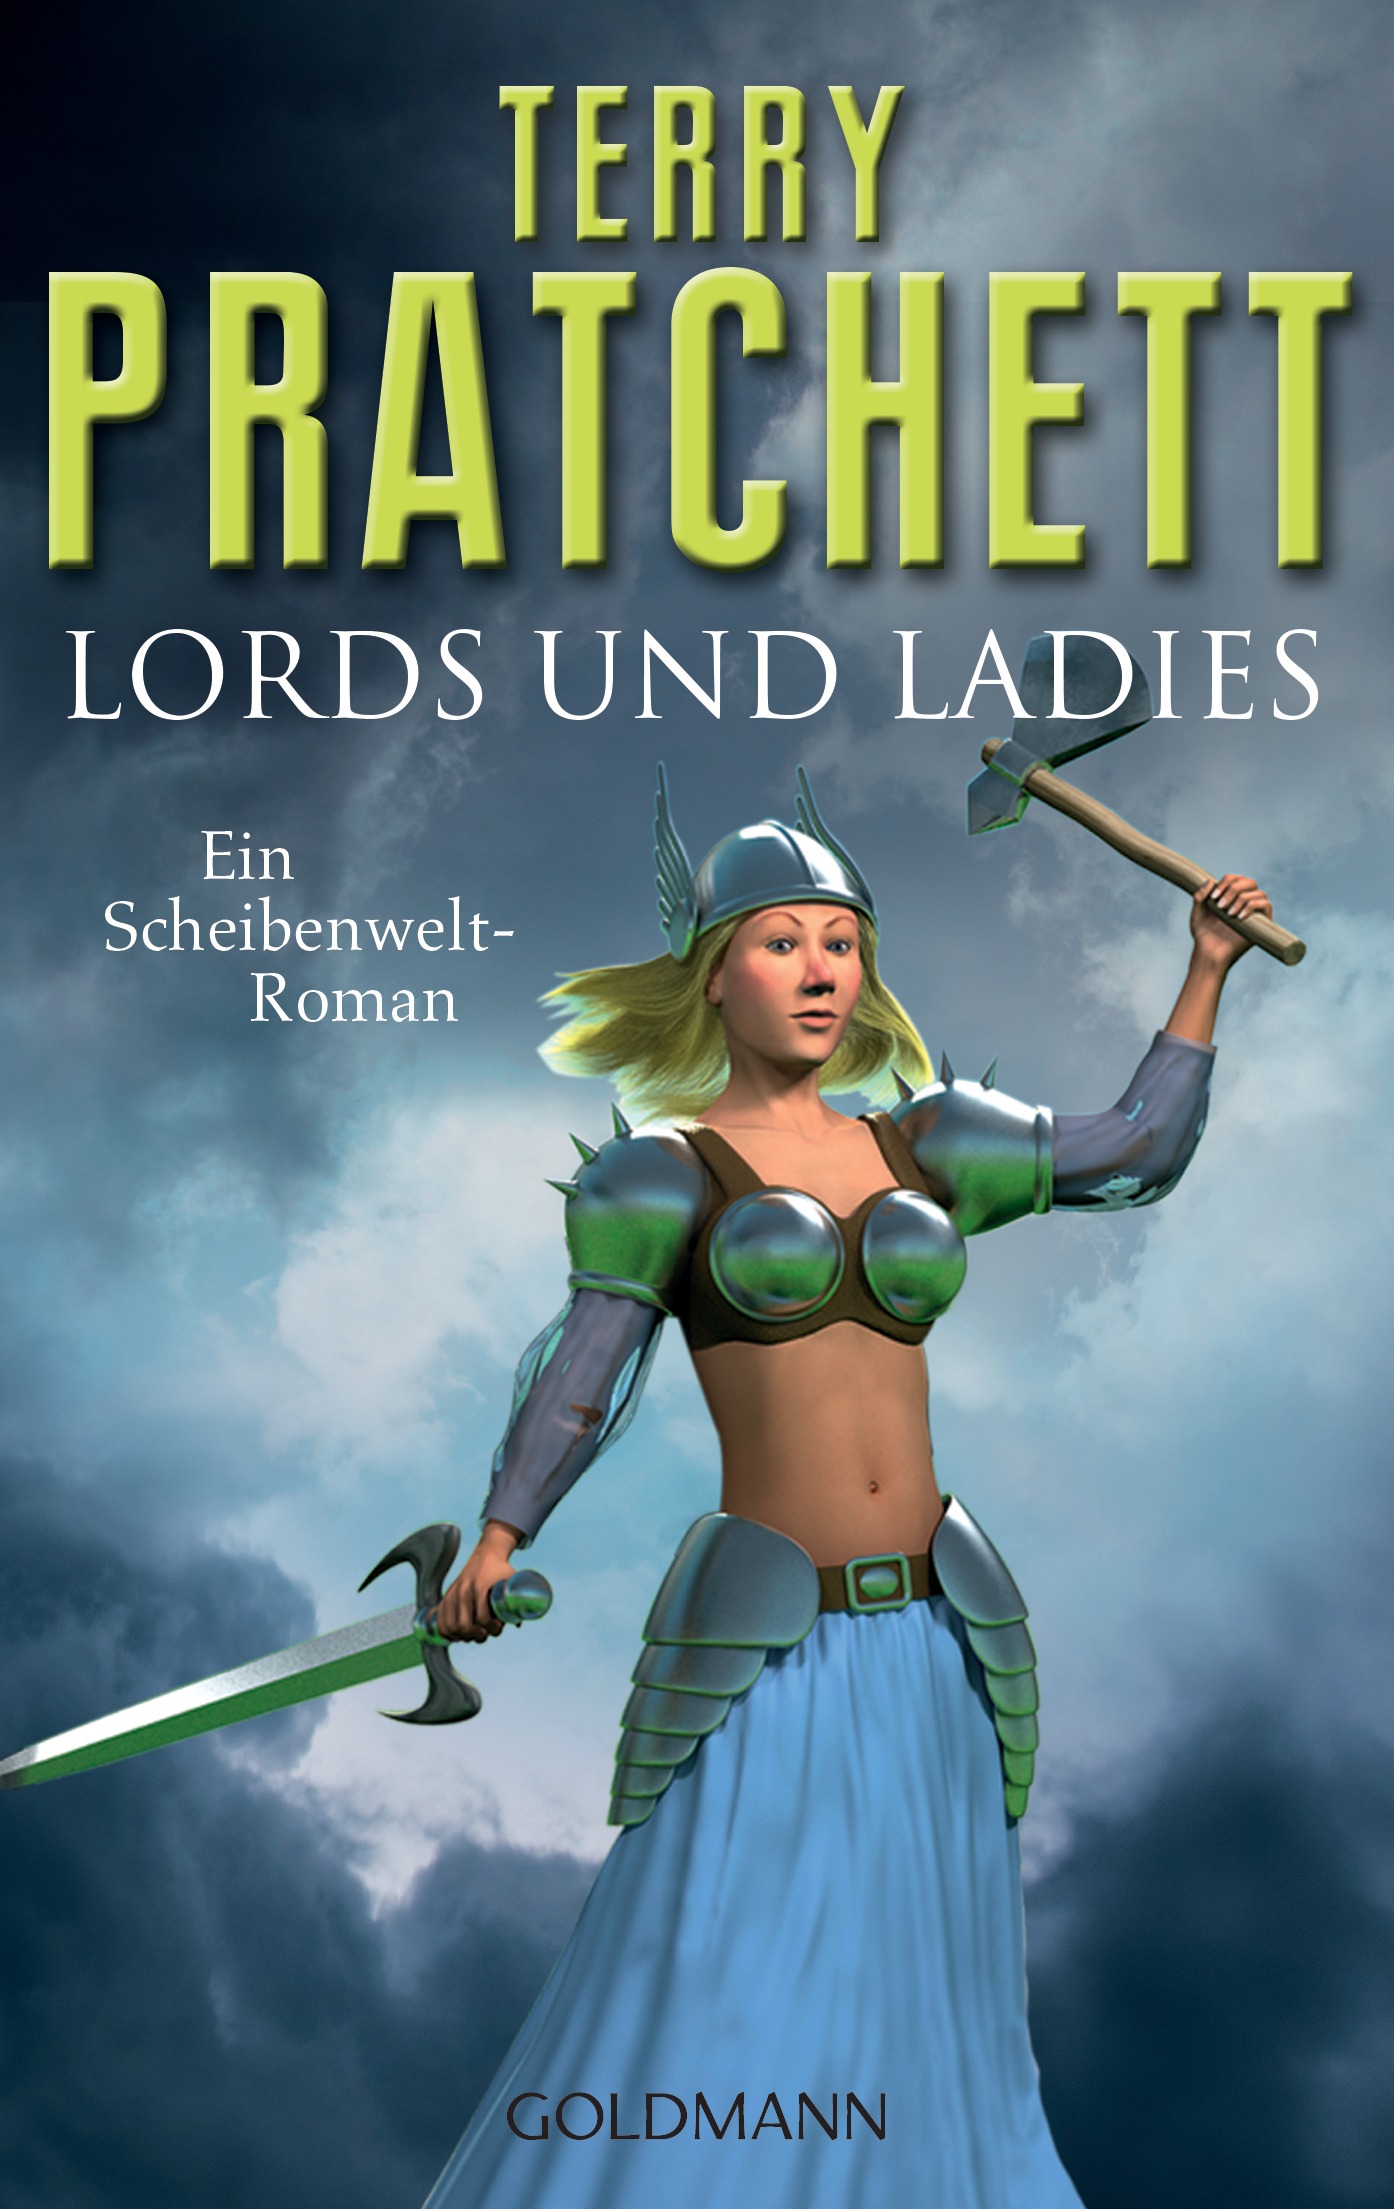 https://www.randomhouse.de/content/edition/covervoila_hires/Pratchett_TLords_und_Ladies_Neu-Ue_168847.jpg